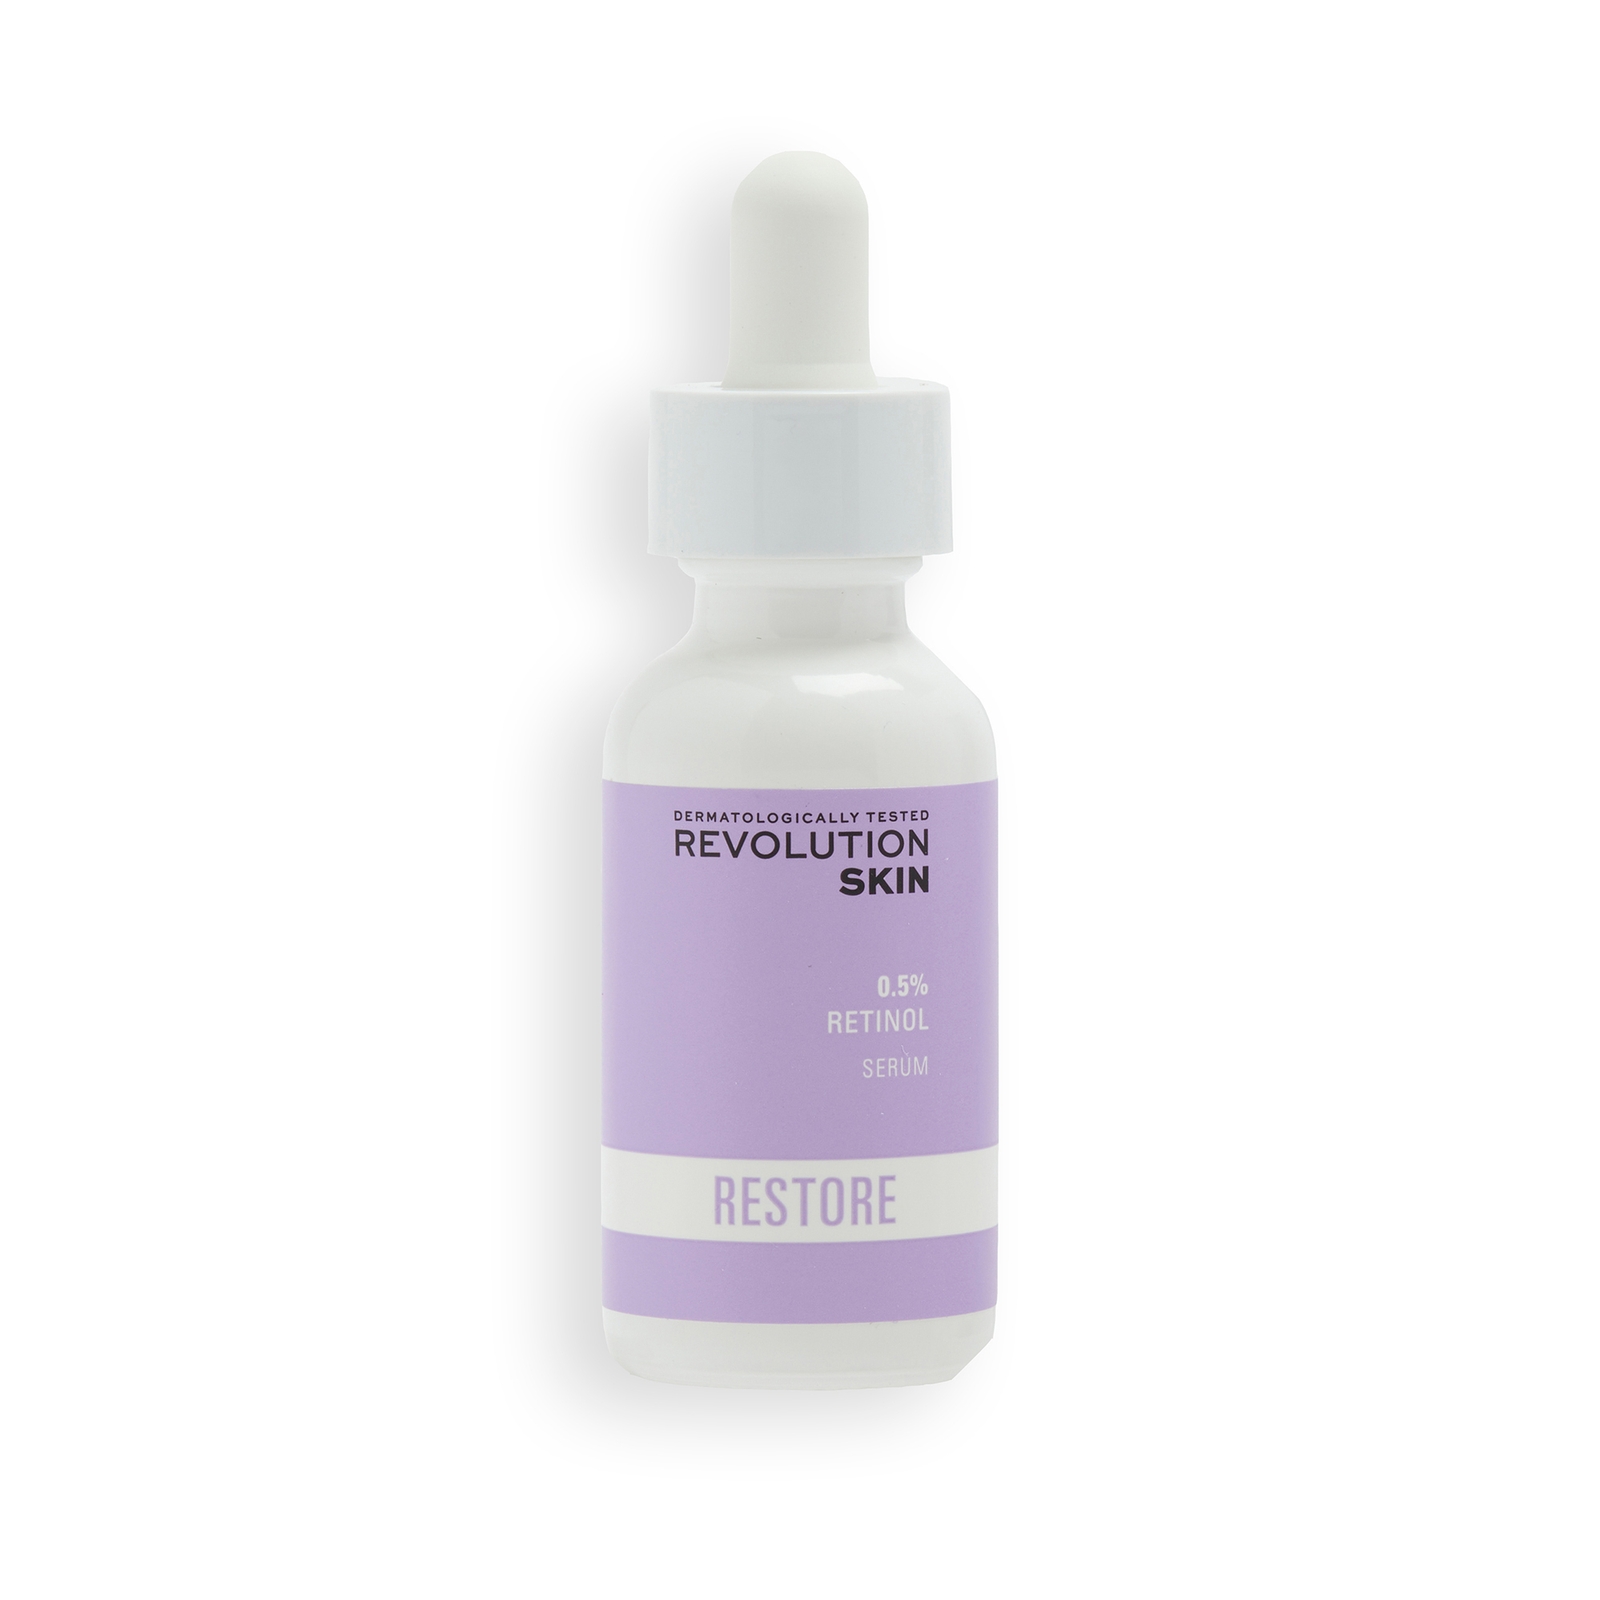 Revolution Skincare 0.5% Retinol Intense Serum